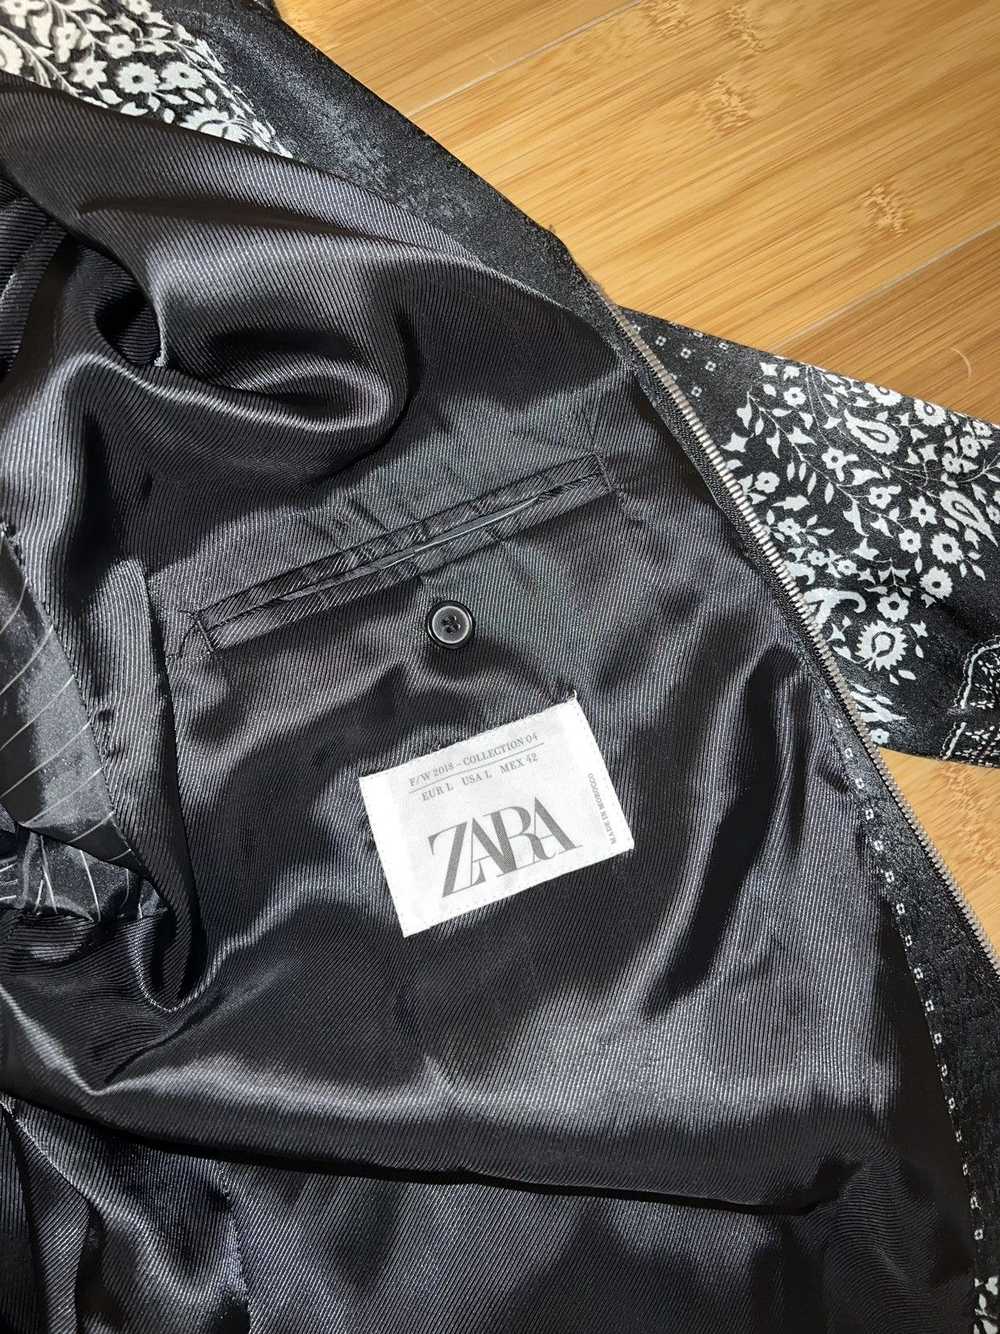 Zara Bandana Zip Up Jacket - image 7